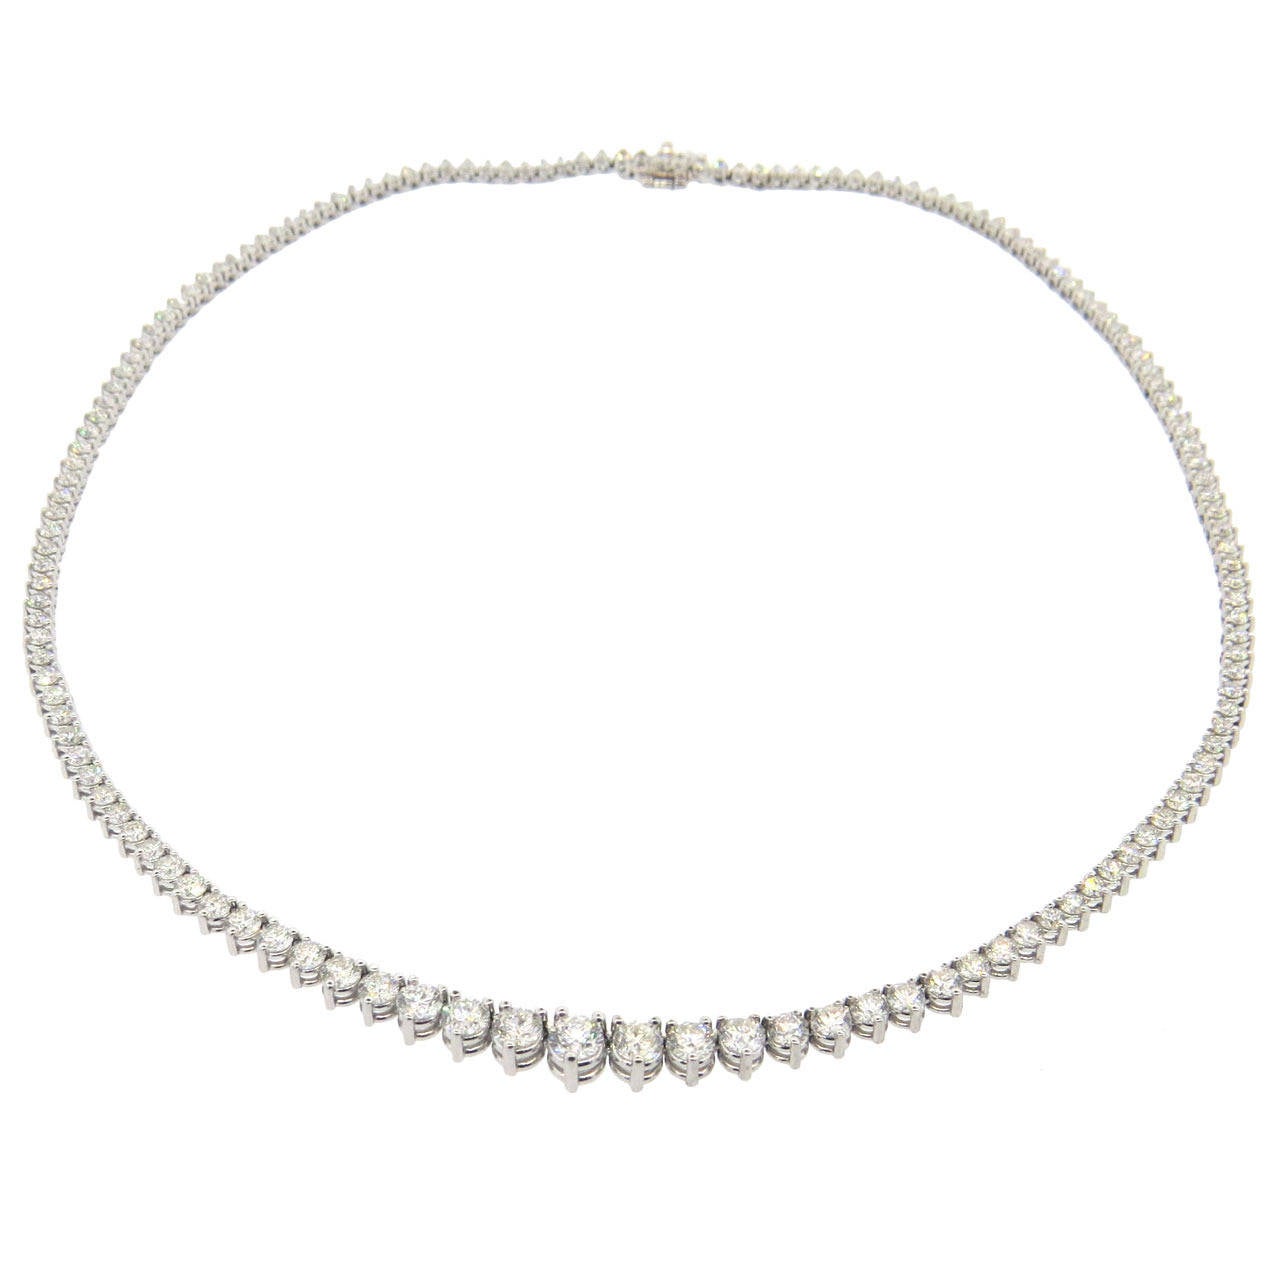 10 carat Diamond Tennis Necklace 14k White Gold 22